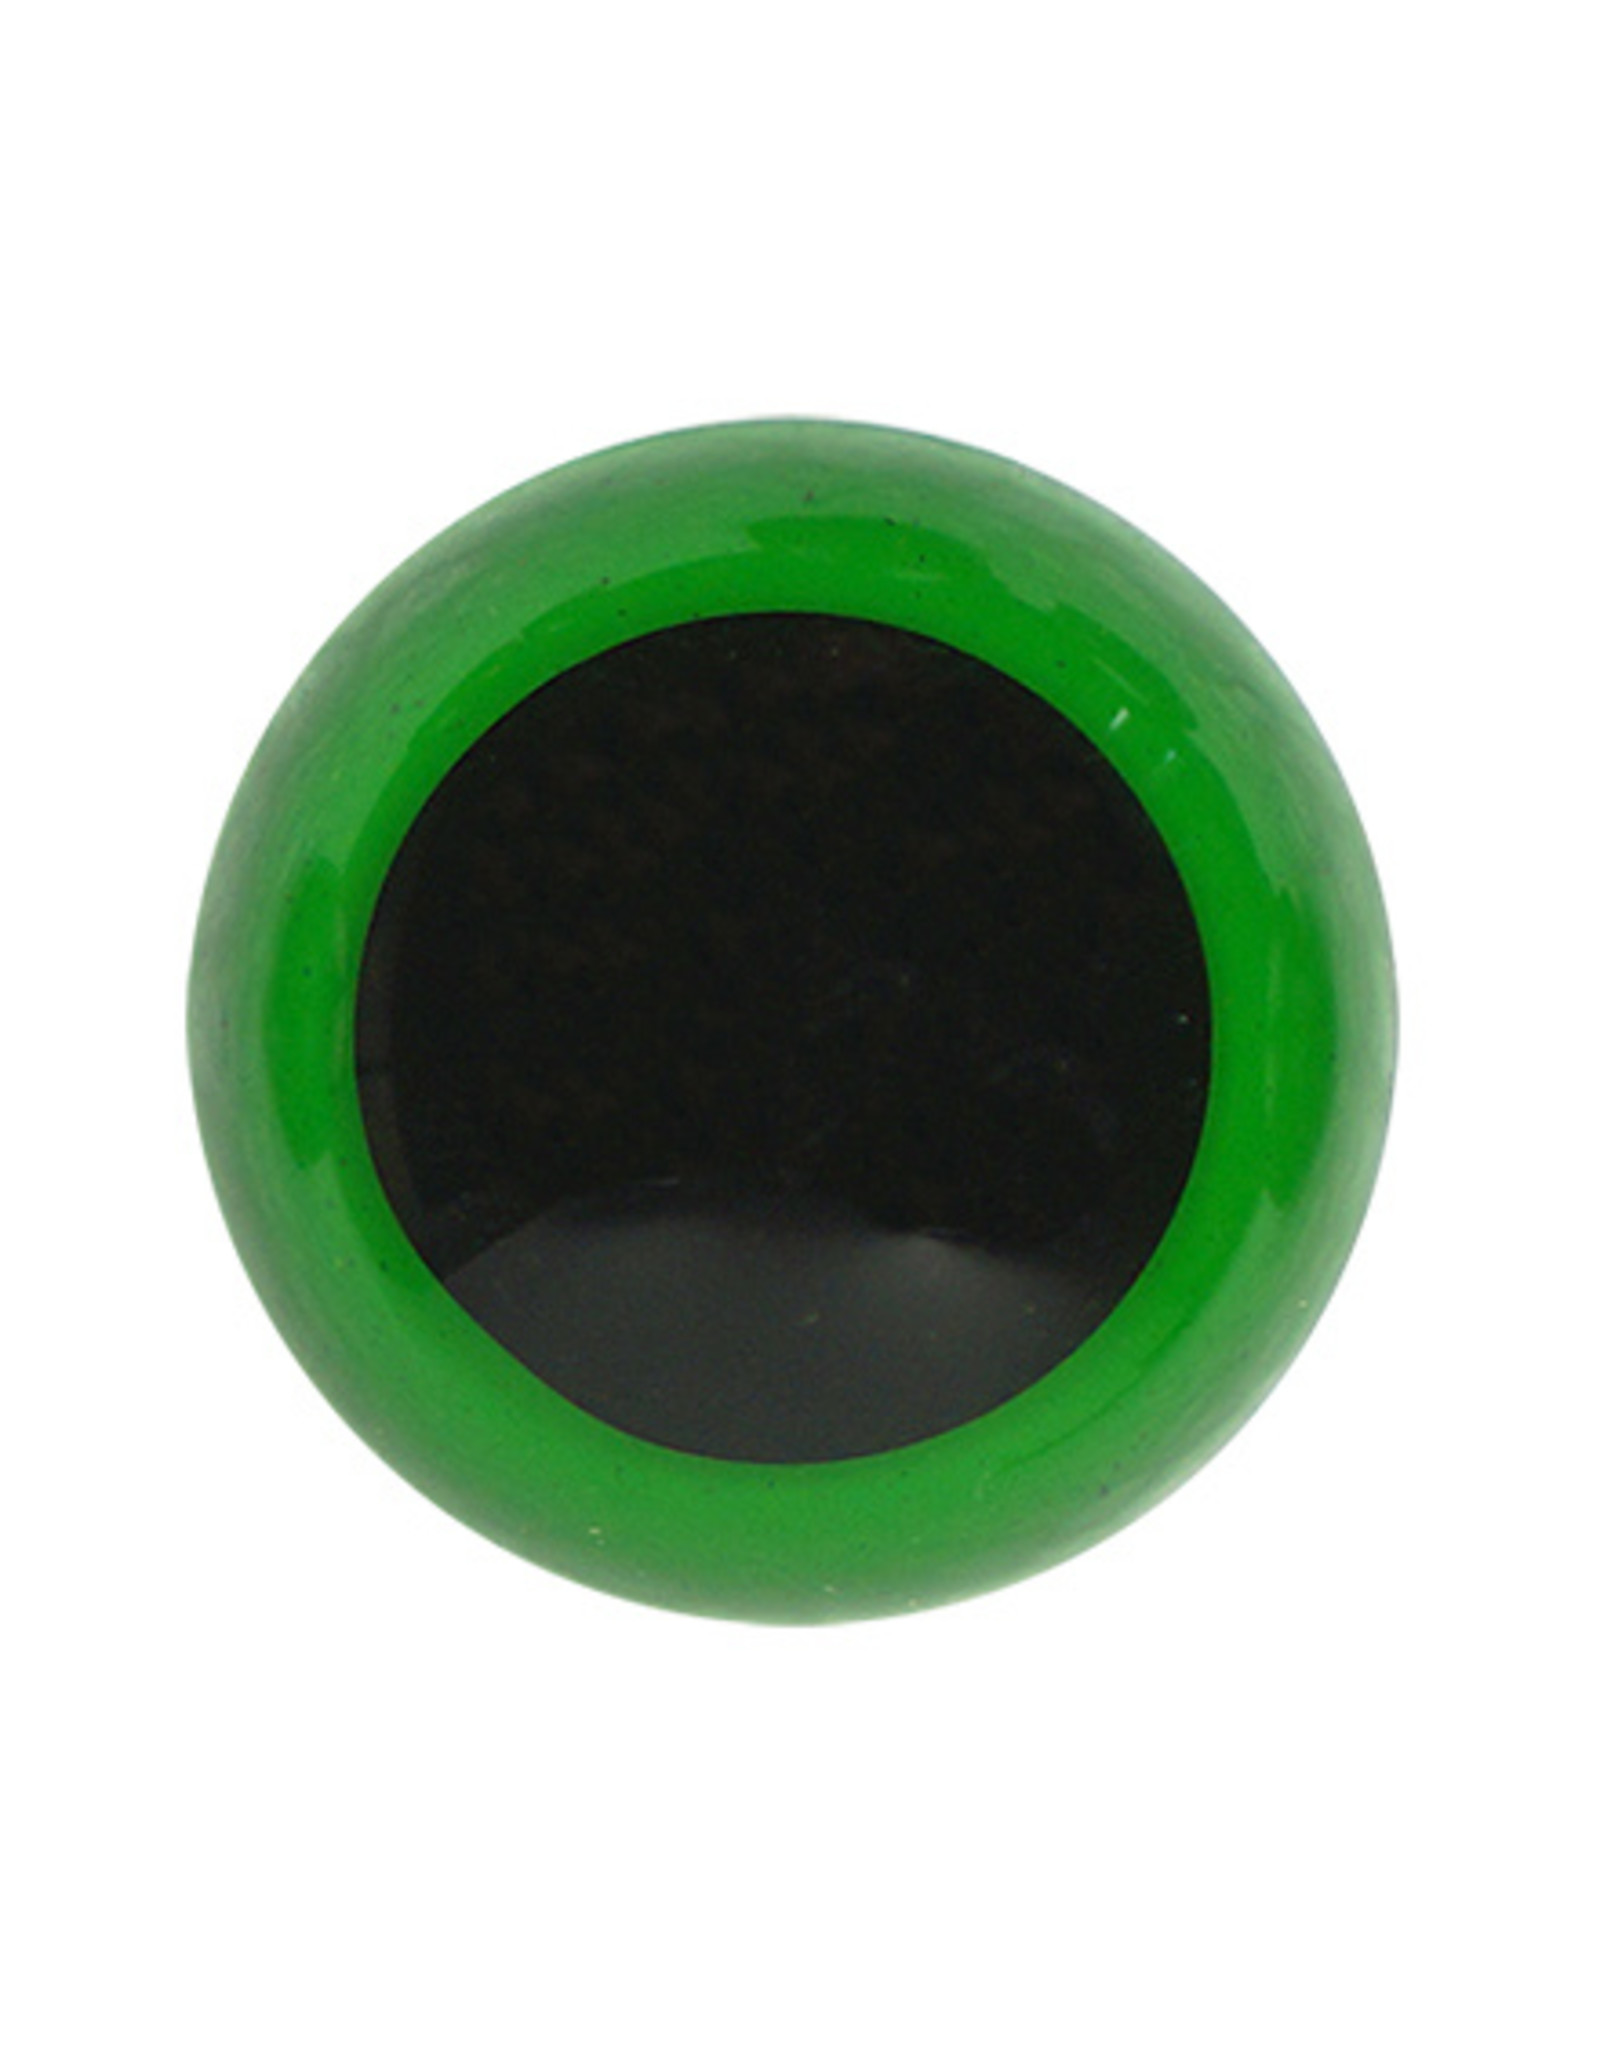 Veiligheidsogen zwart met groene rand 6mm 10st.